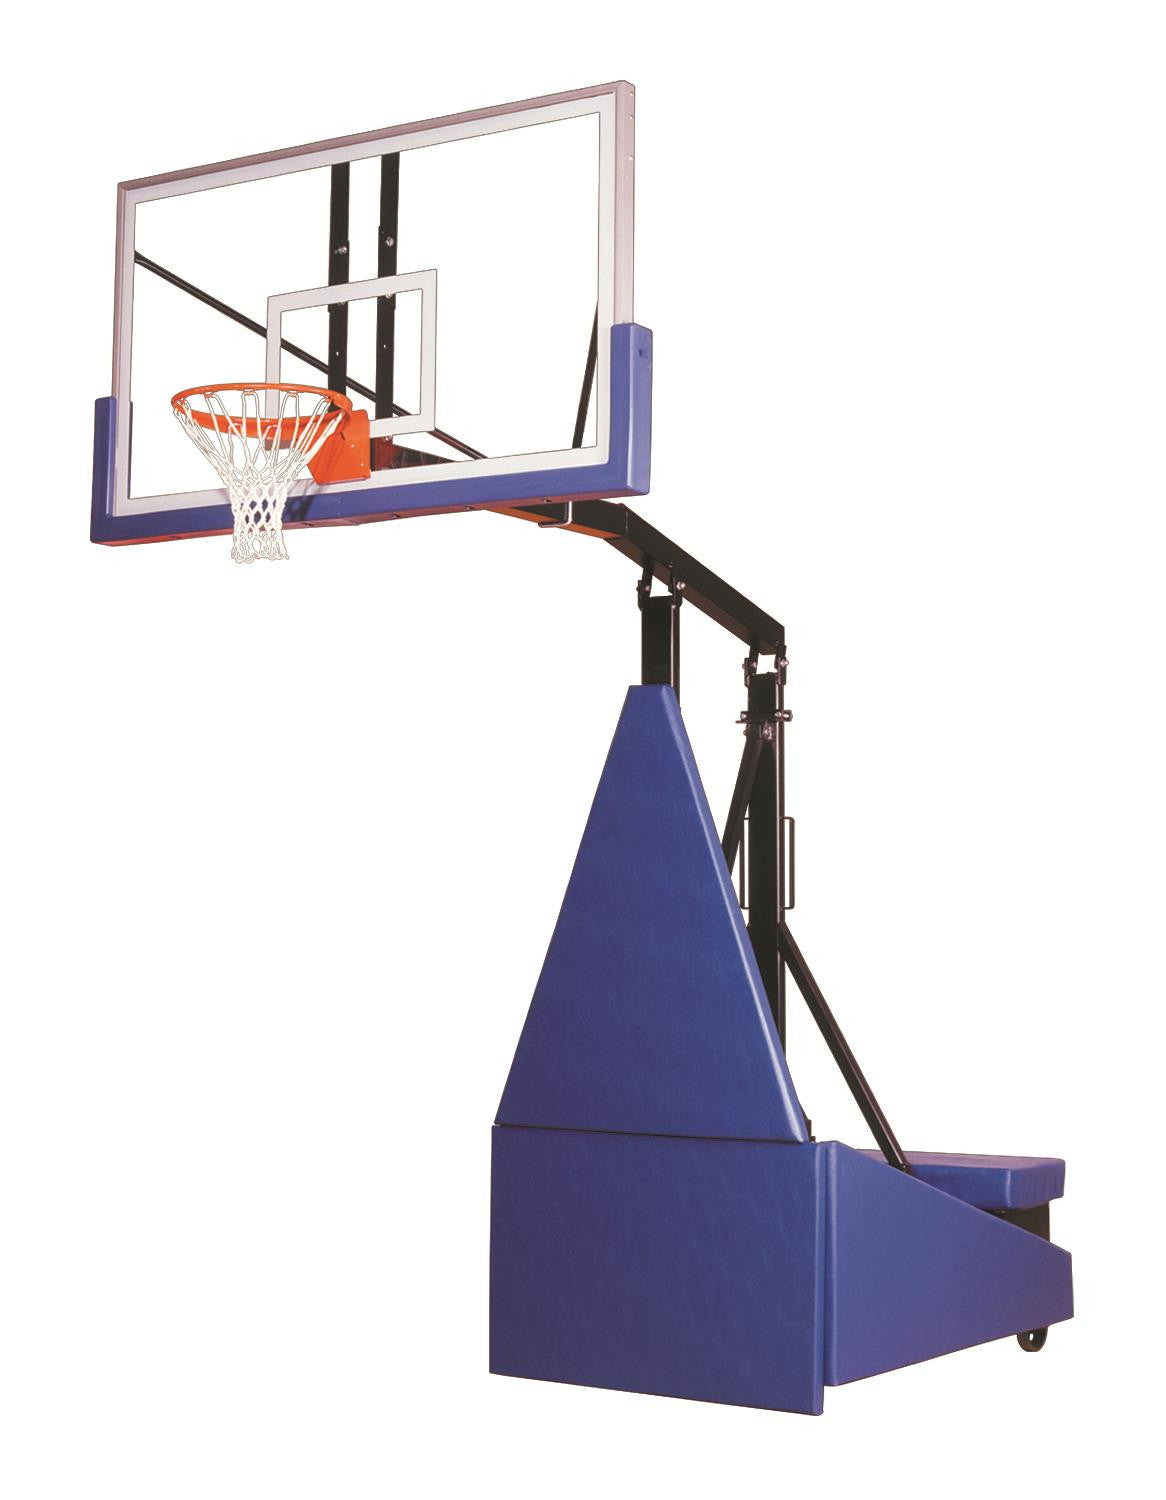 First Team Storm Supreme Portable Adjustable Basketball Hoop 72 inch Acrylic